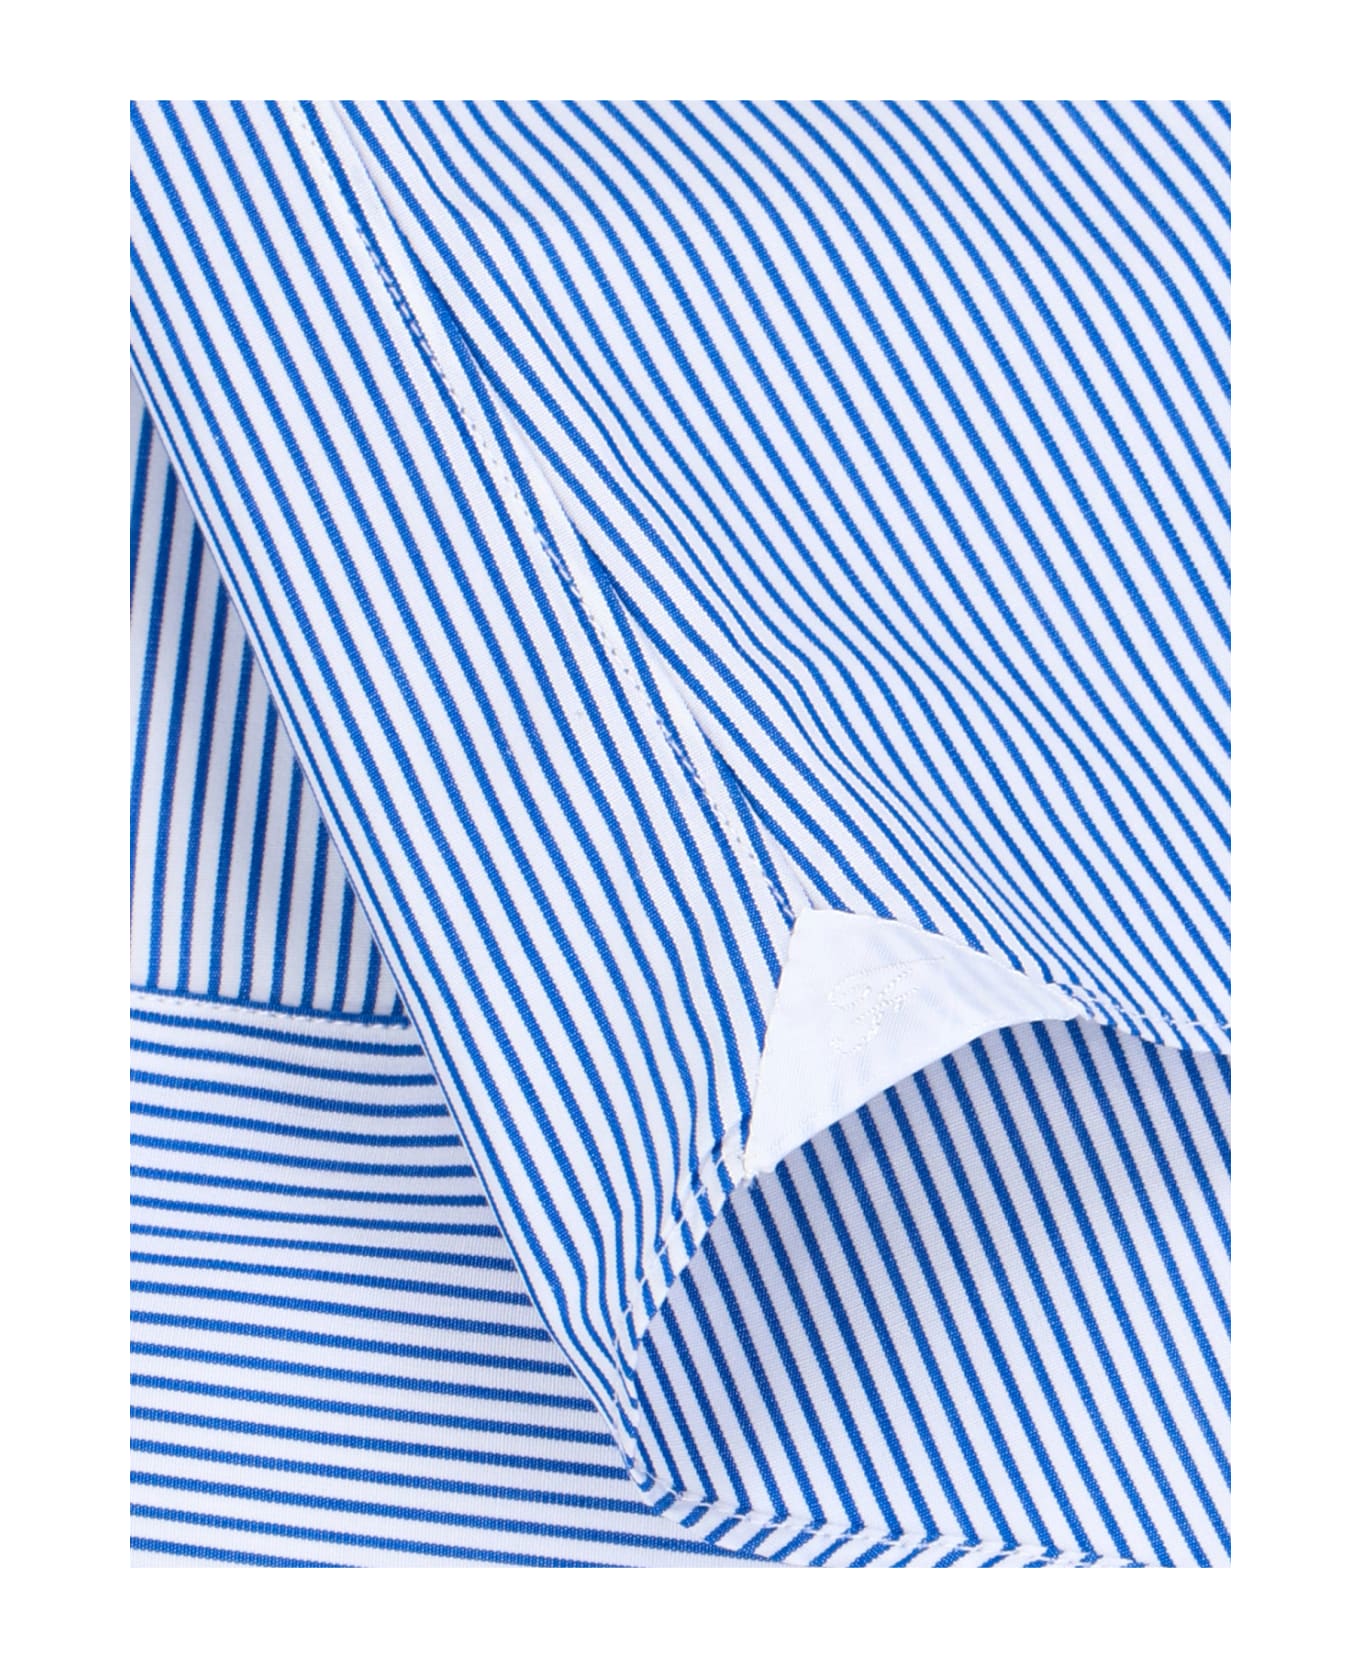 Finamore Striped Shirt - Light Blue